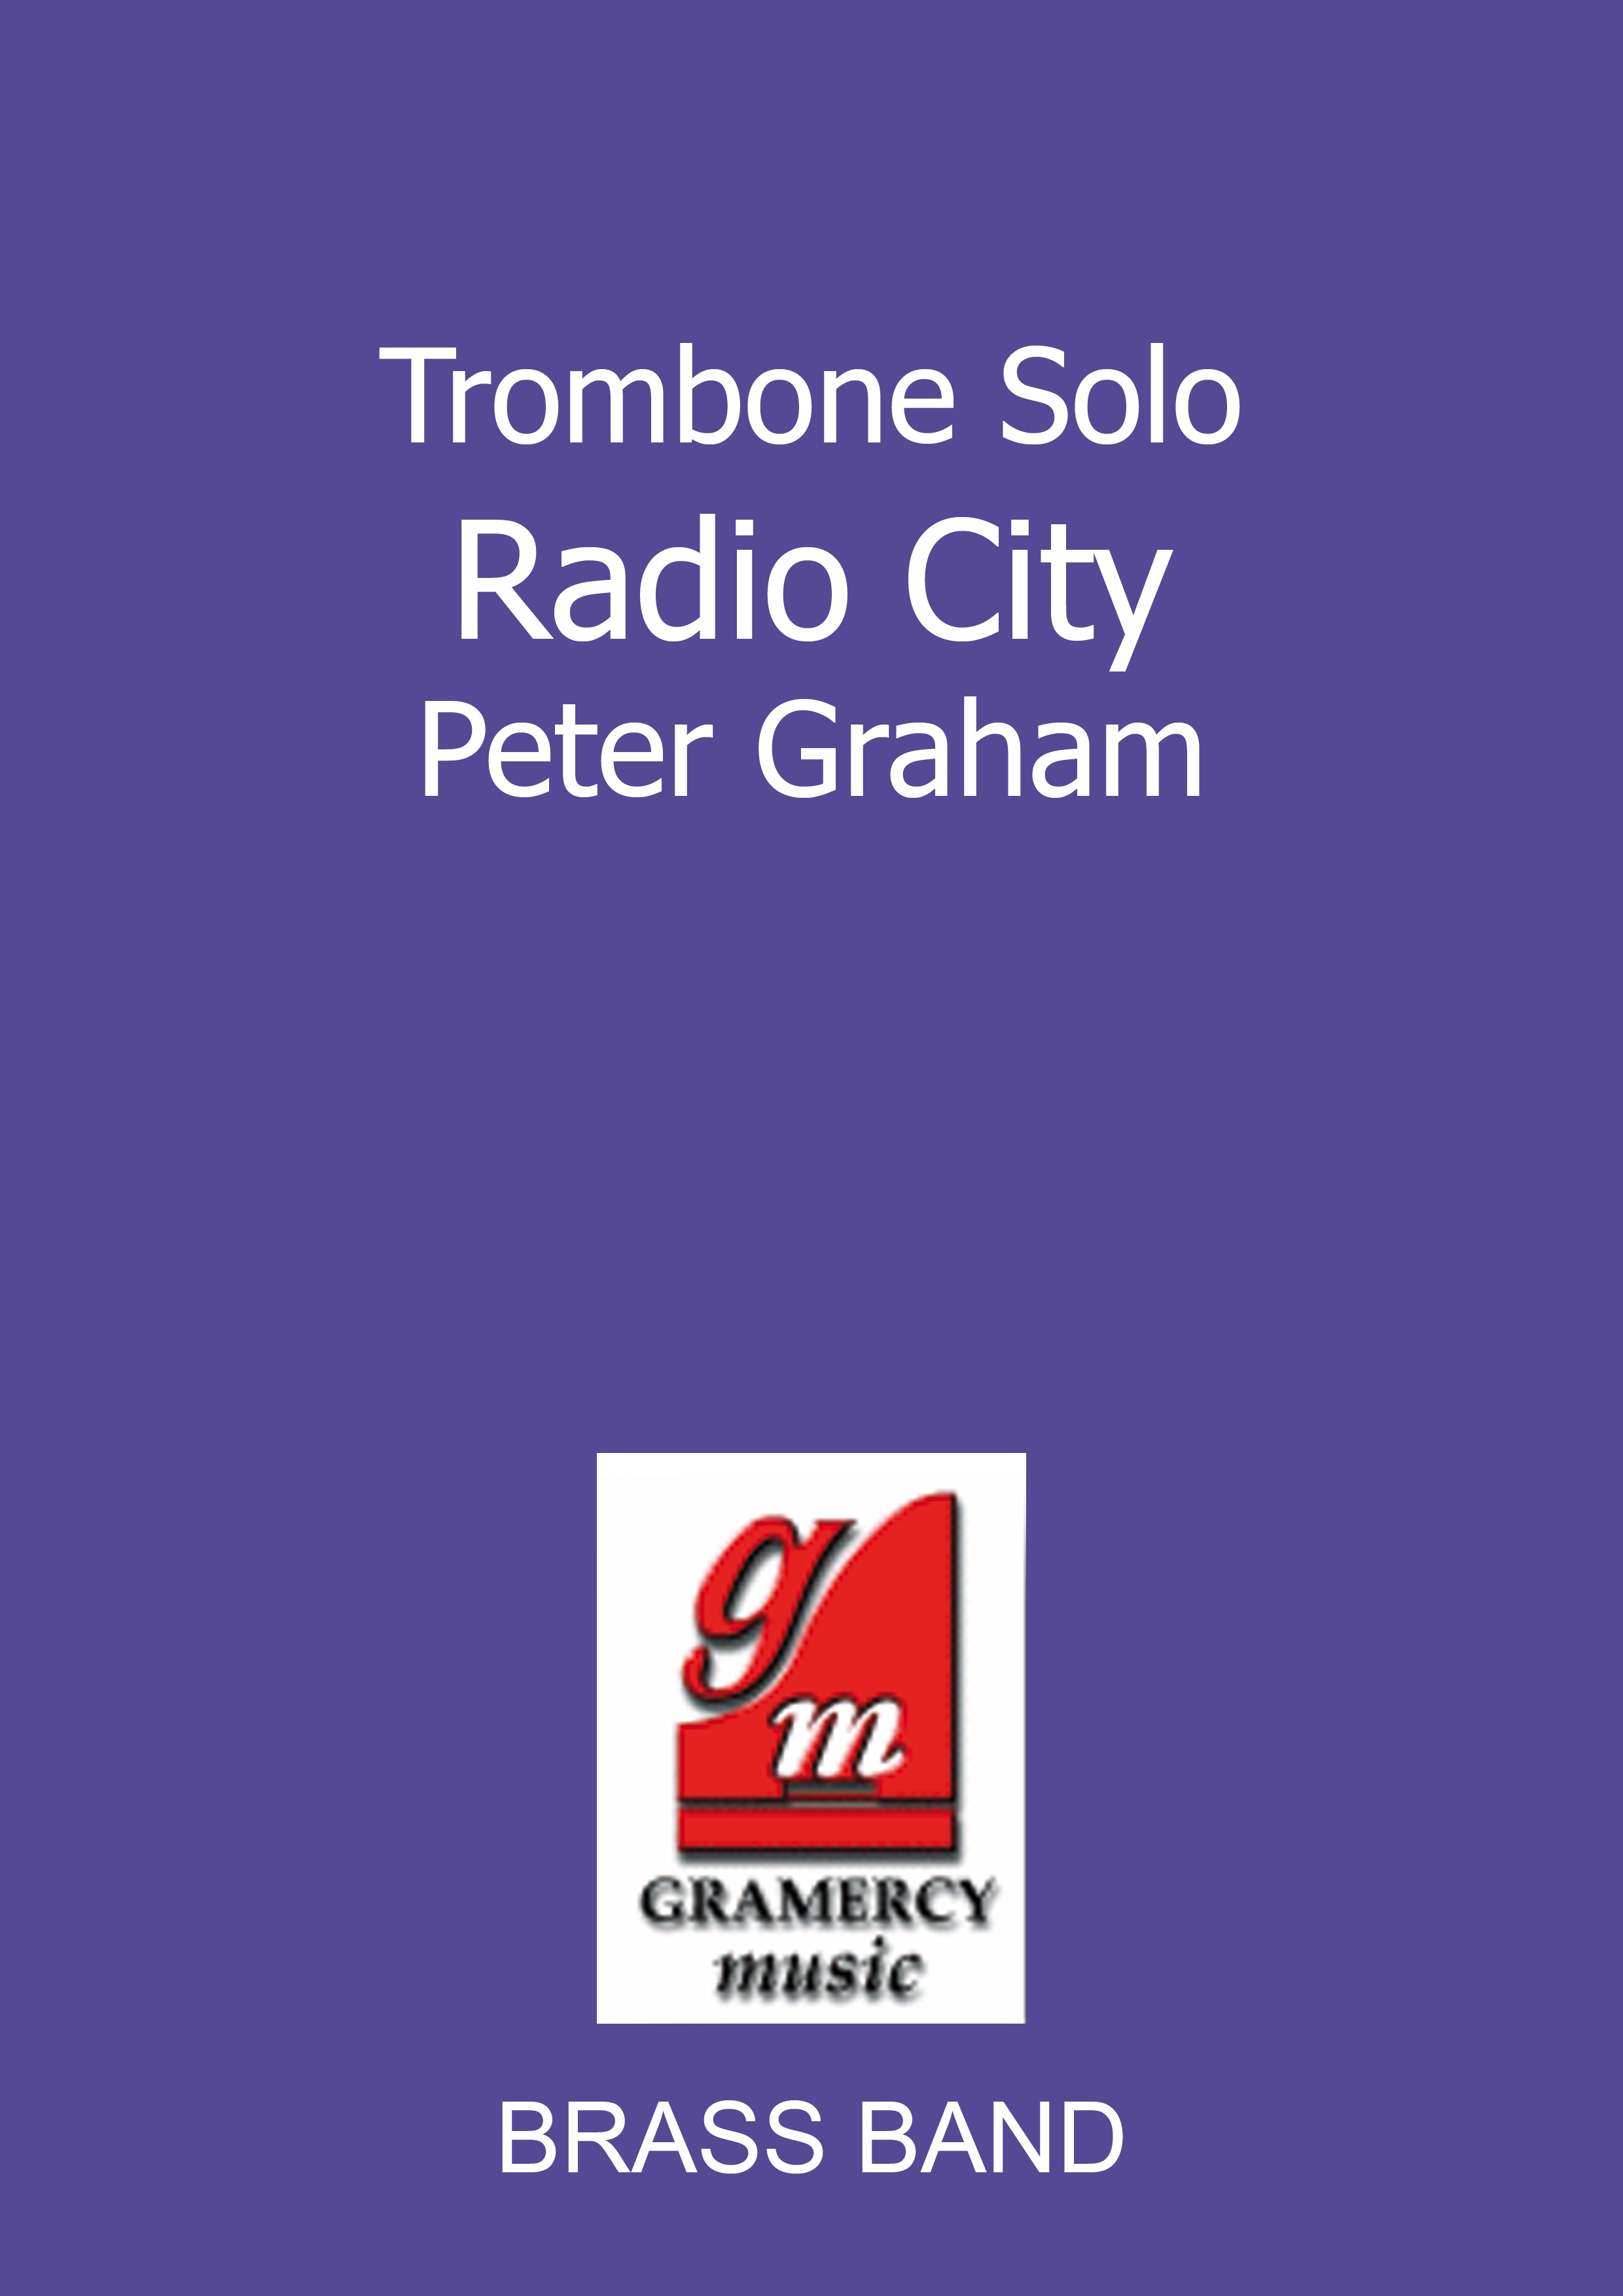 Radio City (Trombone Solo with Brass Band)